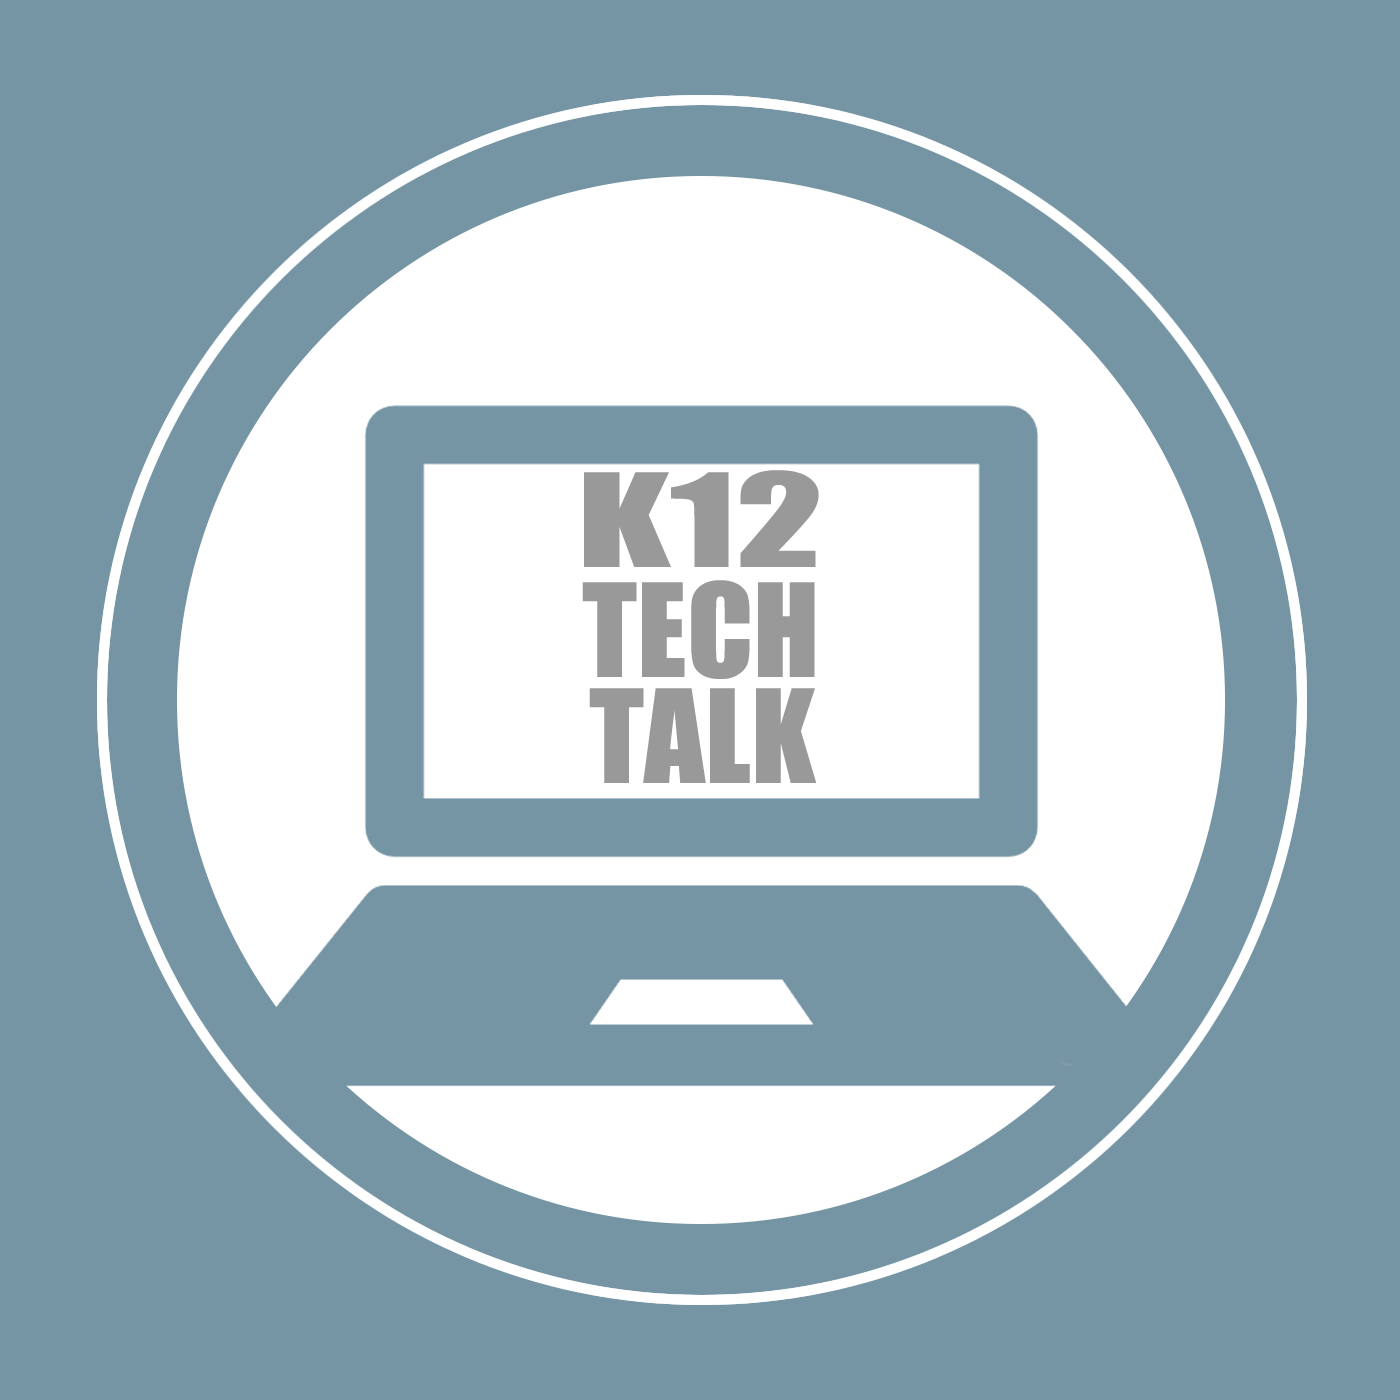 K12 Tech Talk